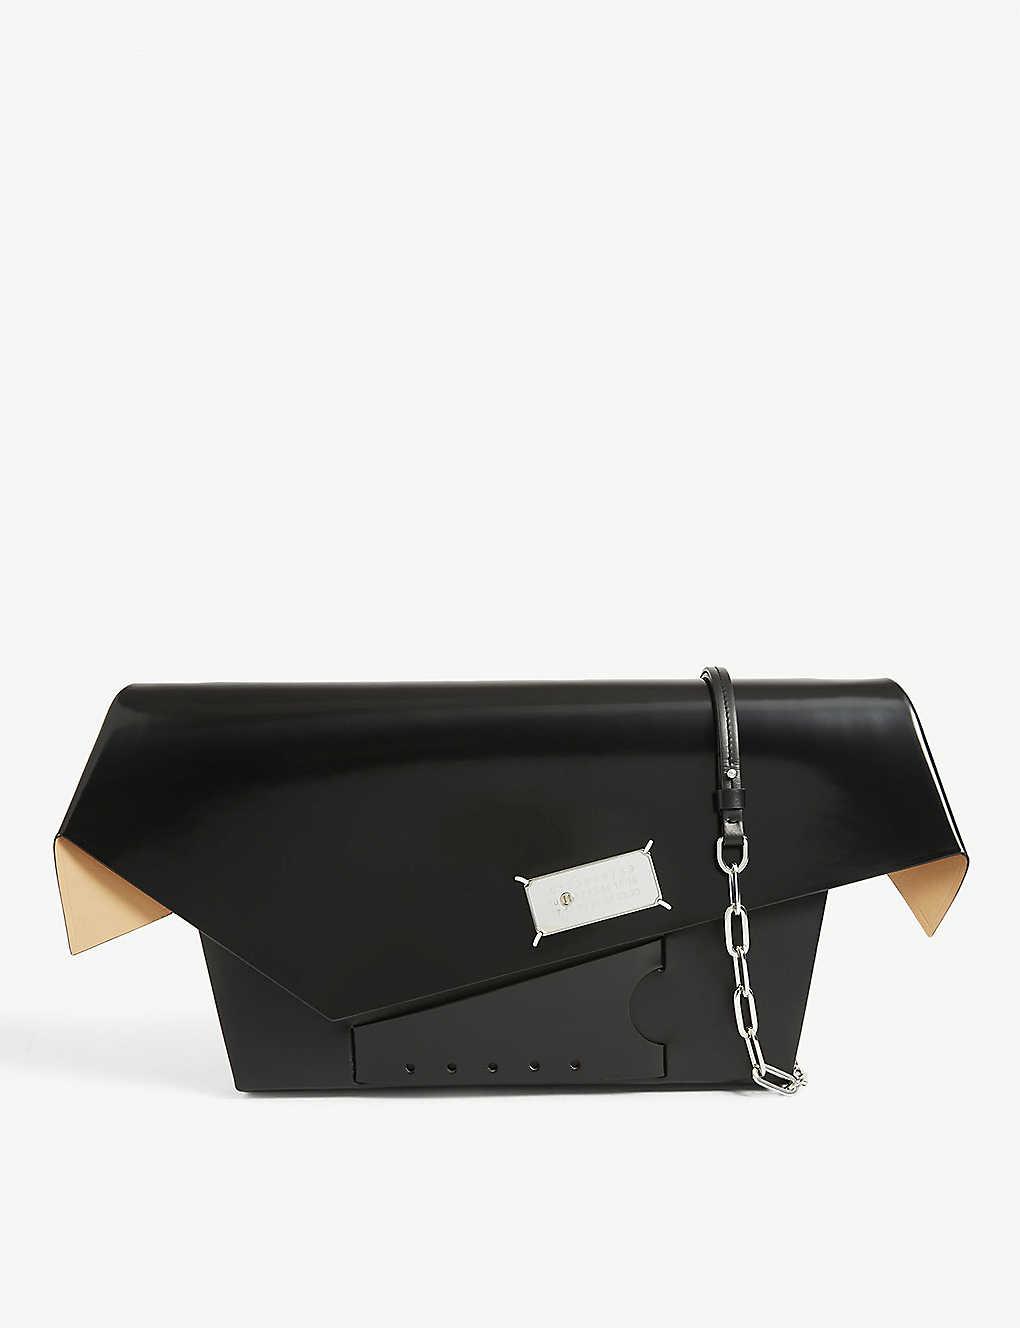 Maison Margiela Snatched Small Leather Shoulder Bag in Black | Lyst